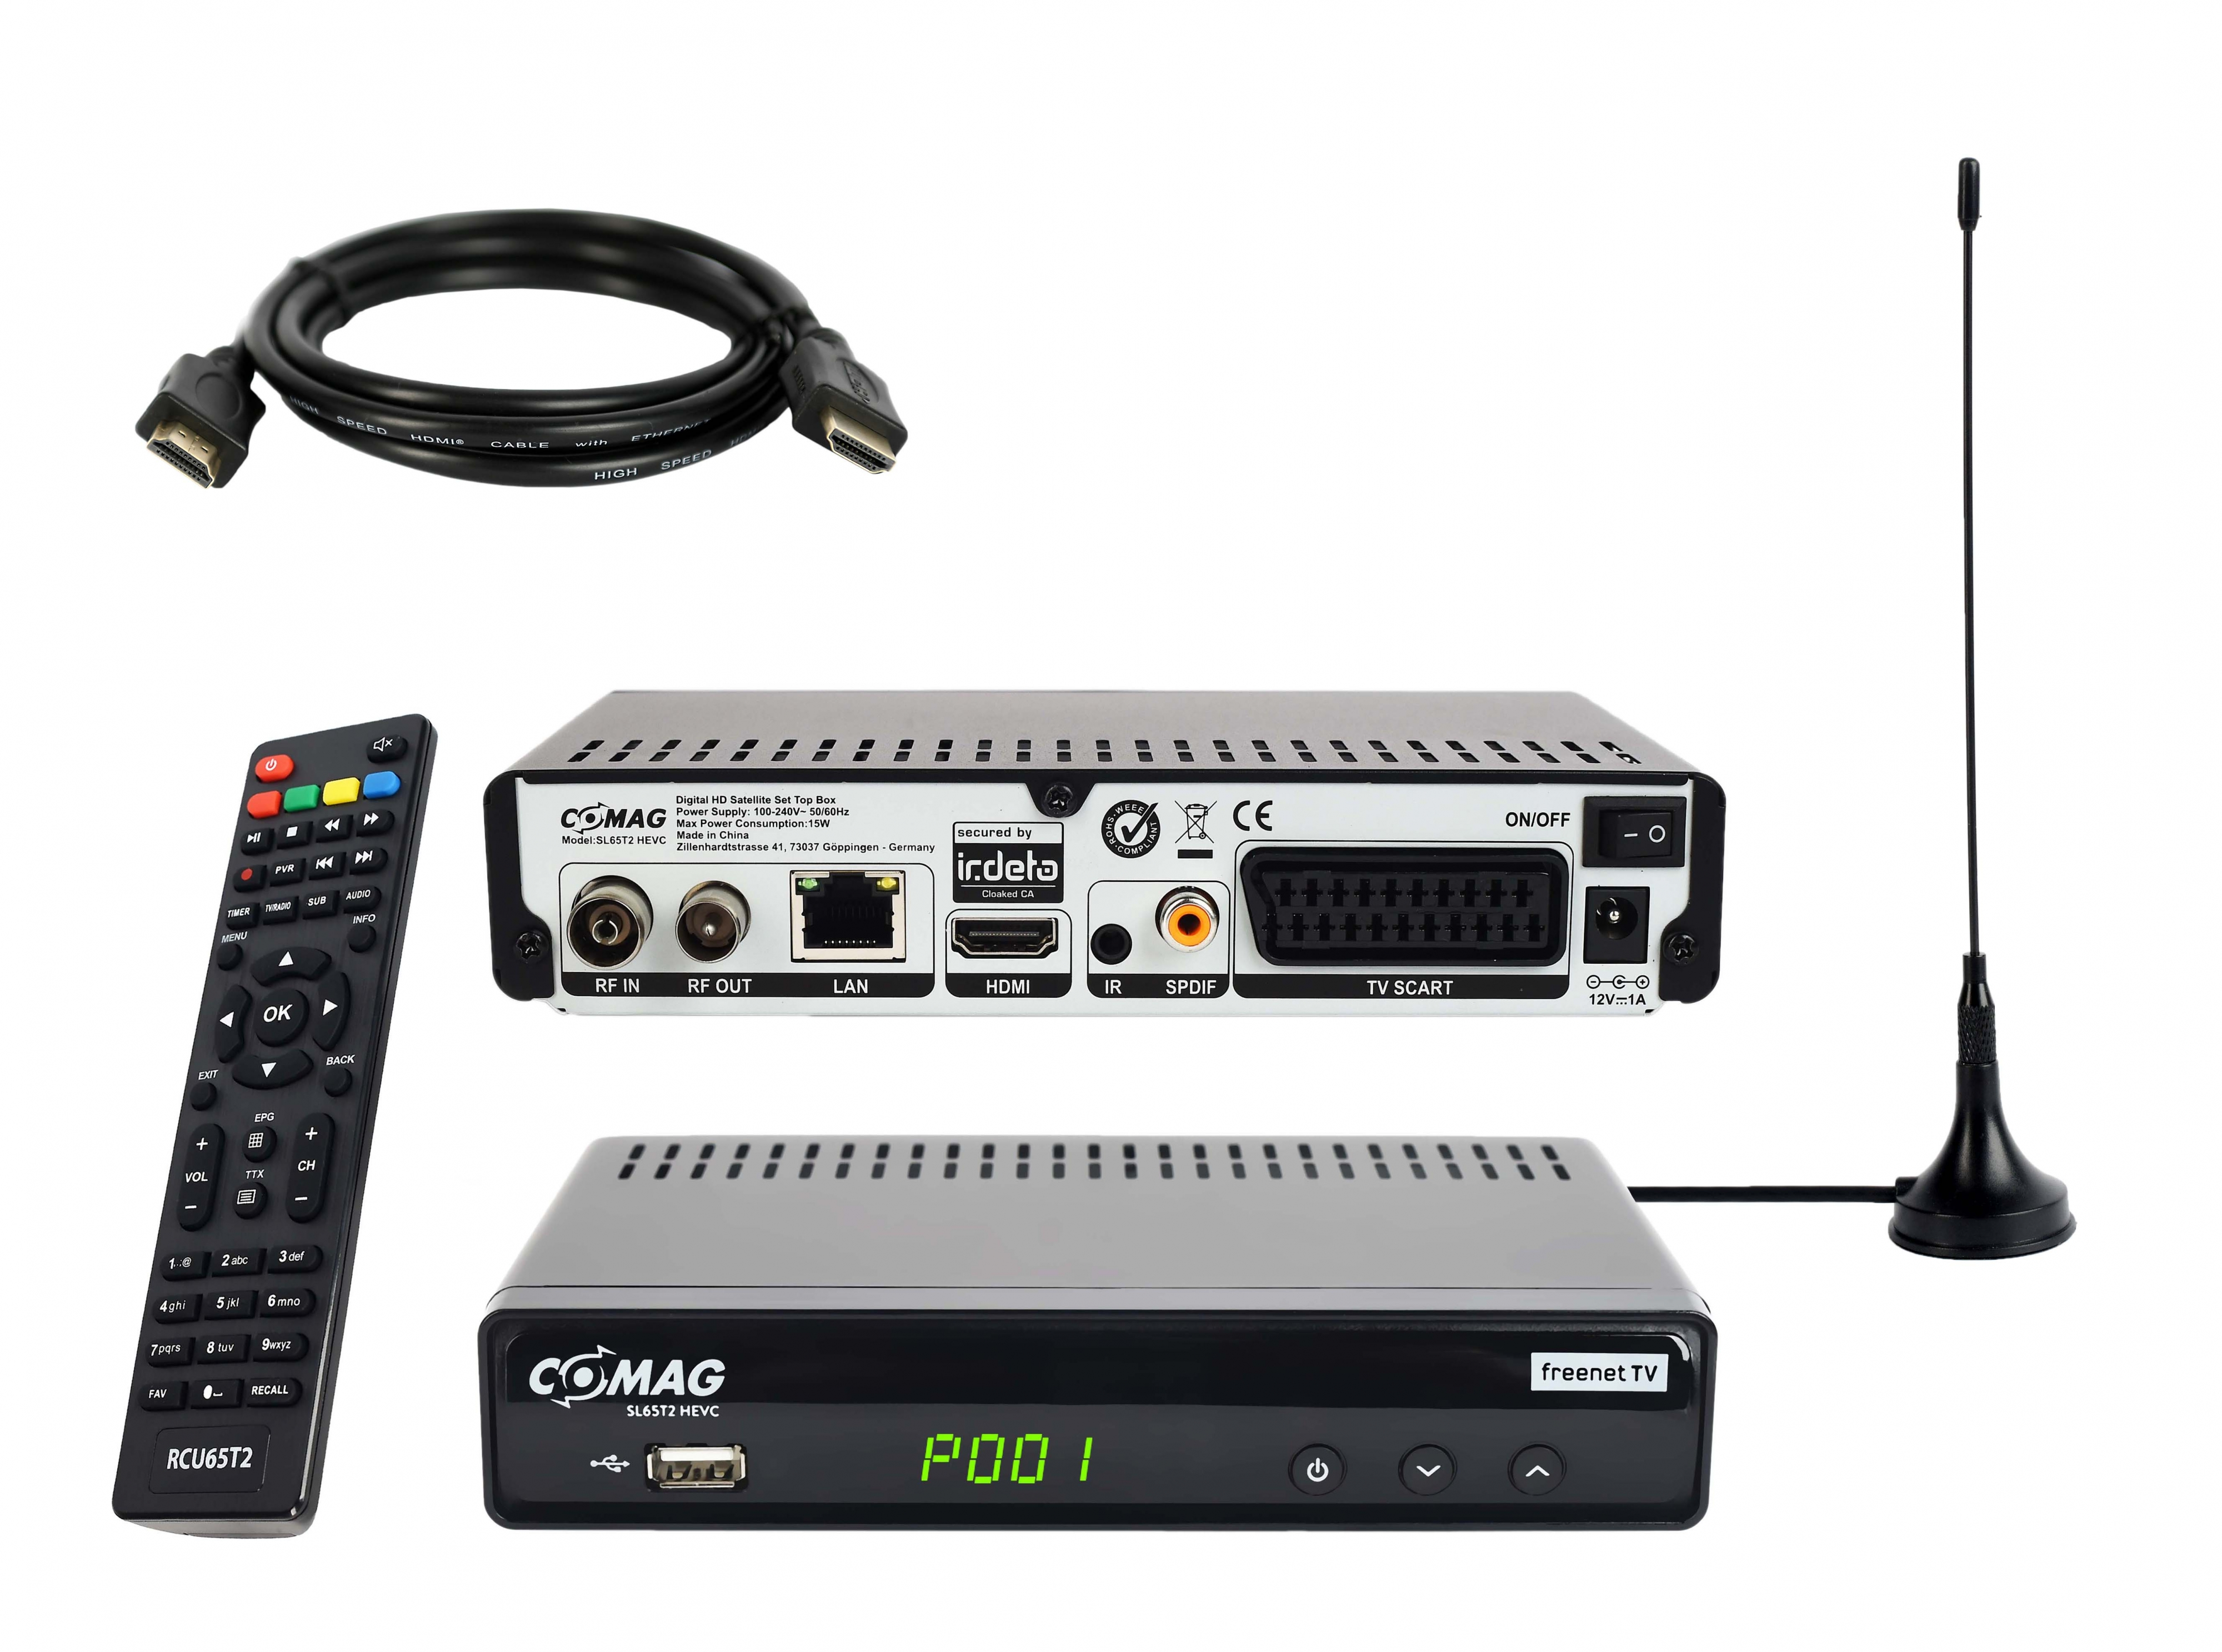 COMAG SL65T2 Bundel DVB-T-Receiver DVB-T2 PVR-Funktion, Home (HDTV, (H.264), DVB-T, schwarz) DVB-T2 (H.265)